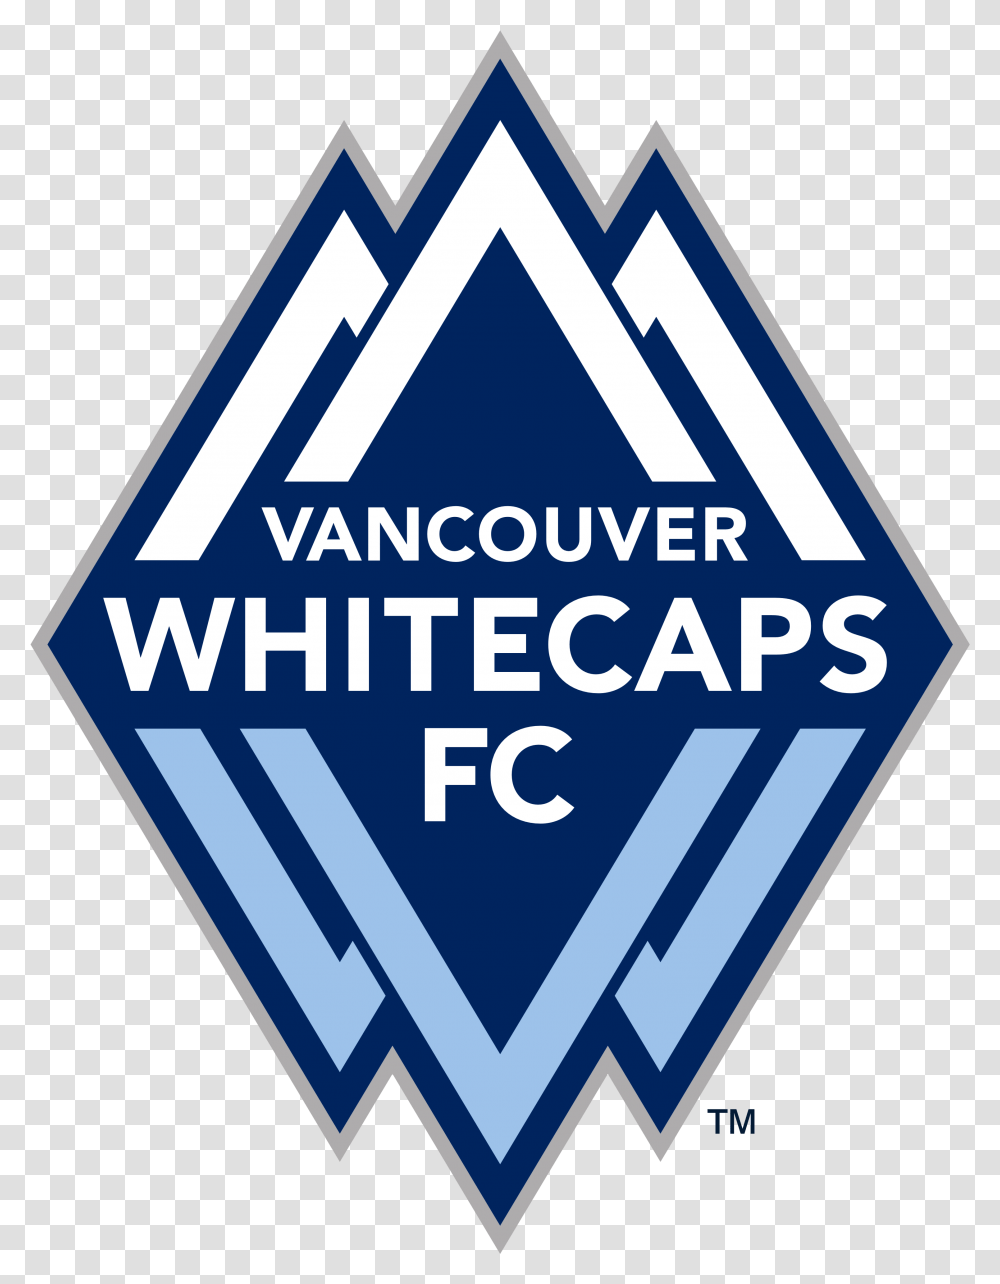 Vancouver Whitecaps Fc Logo, Trademark, Label Transparent Png